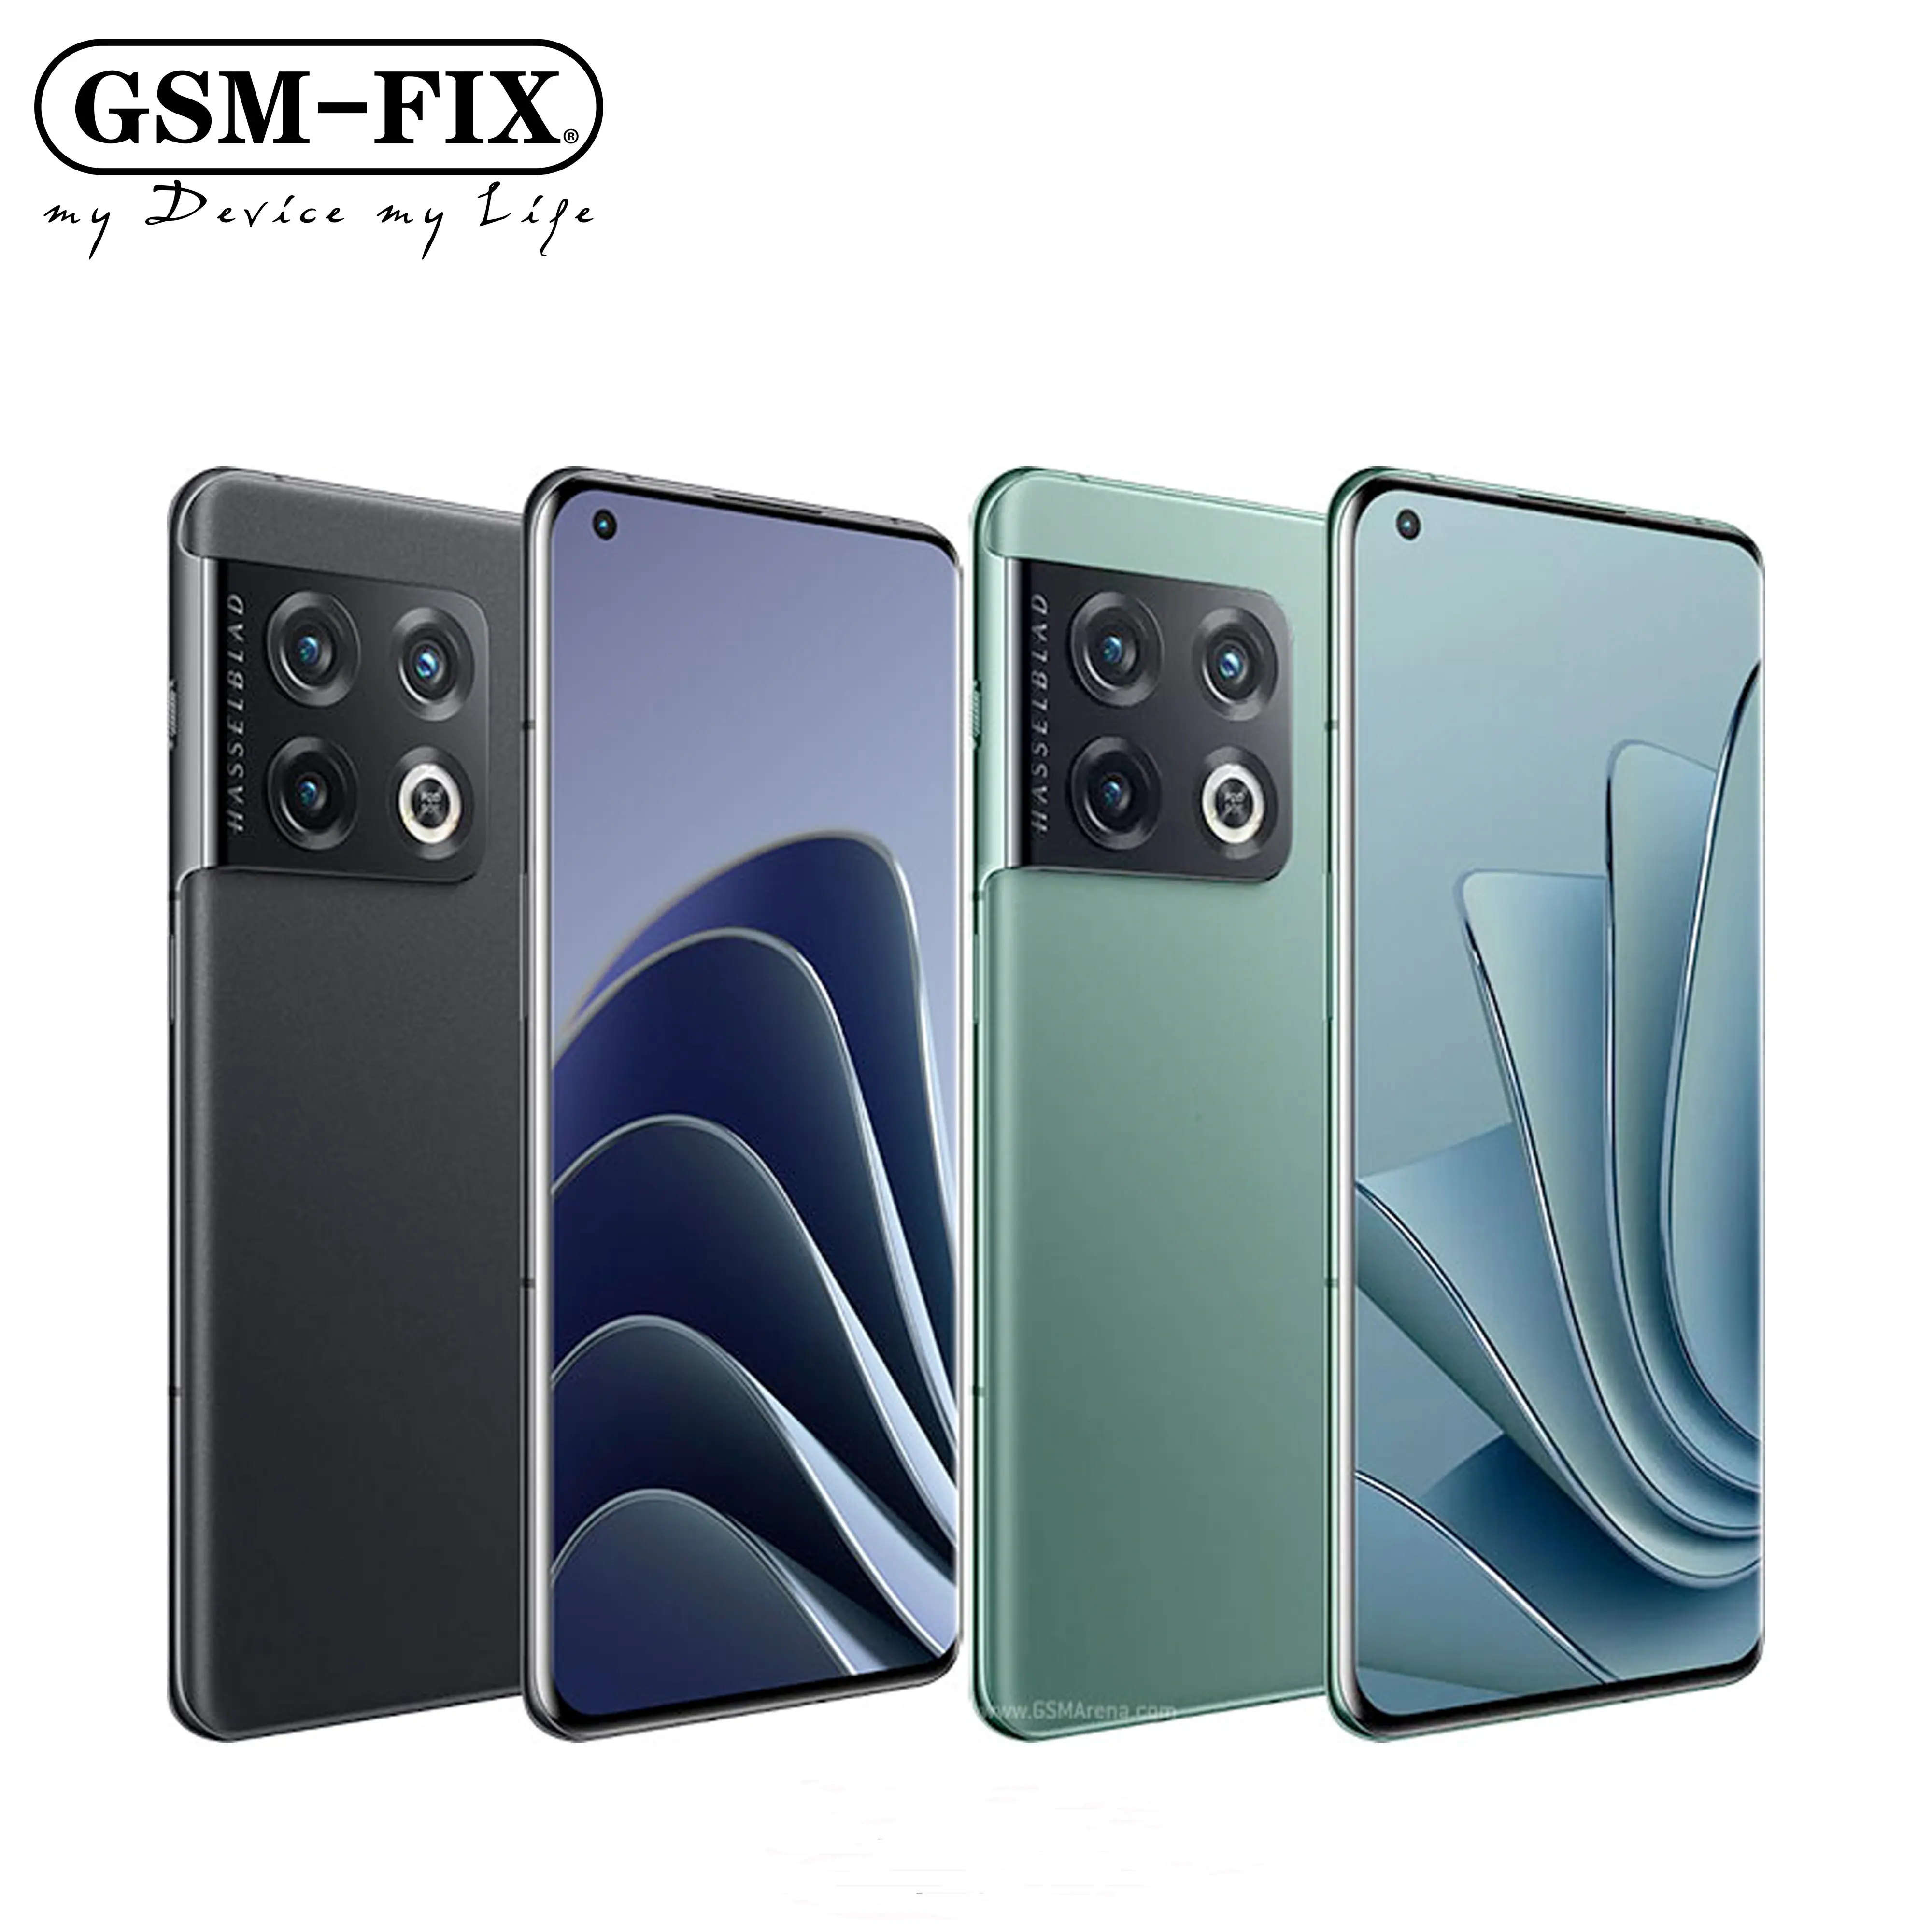 GSM-FIX 5Gスマートフォン12GB256GB Snapdragon 8 Gen1携帯電話OnePlus10Proの急速充電